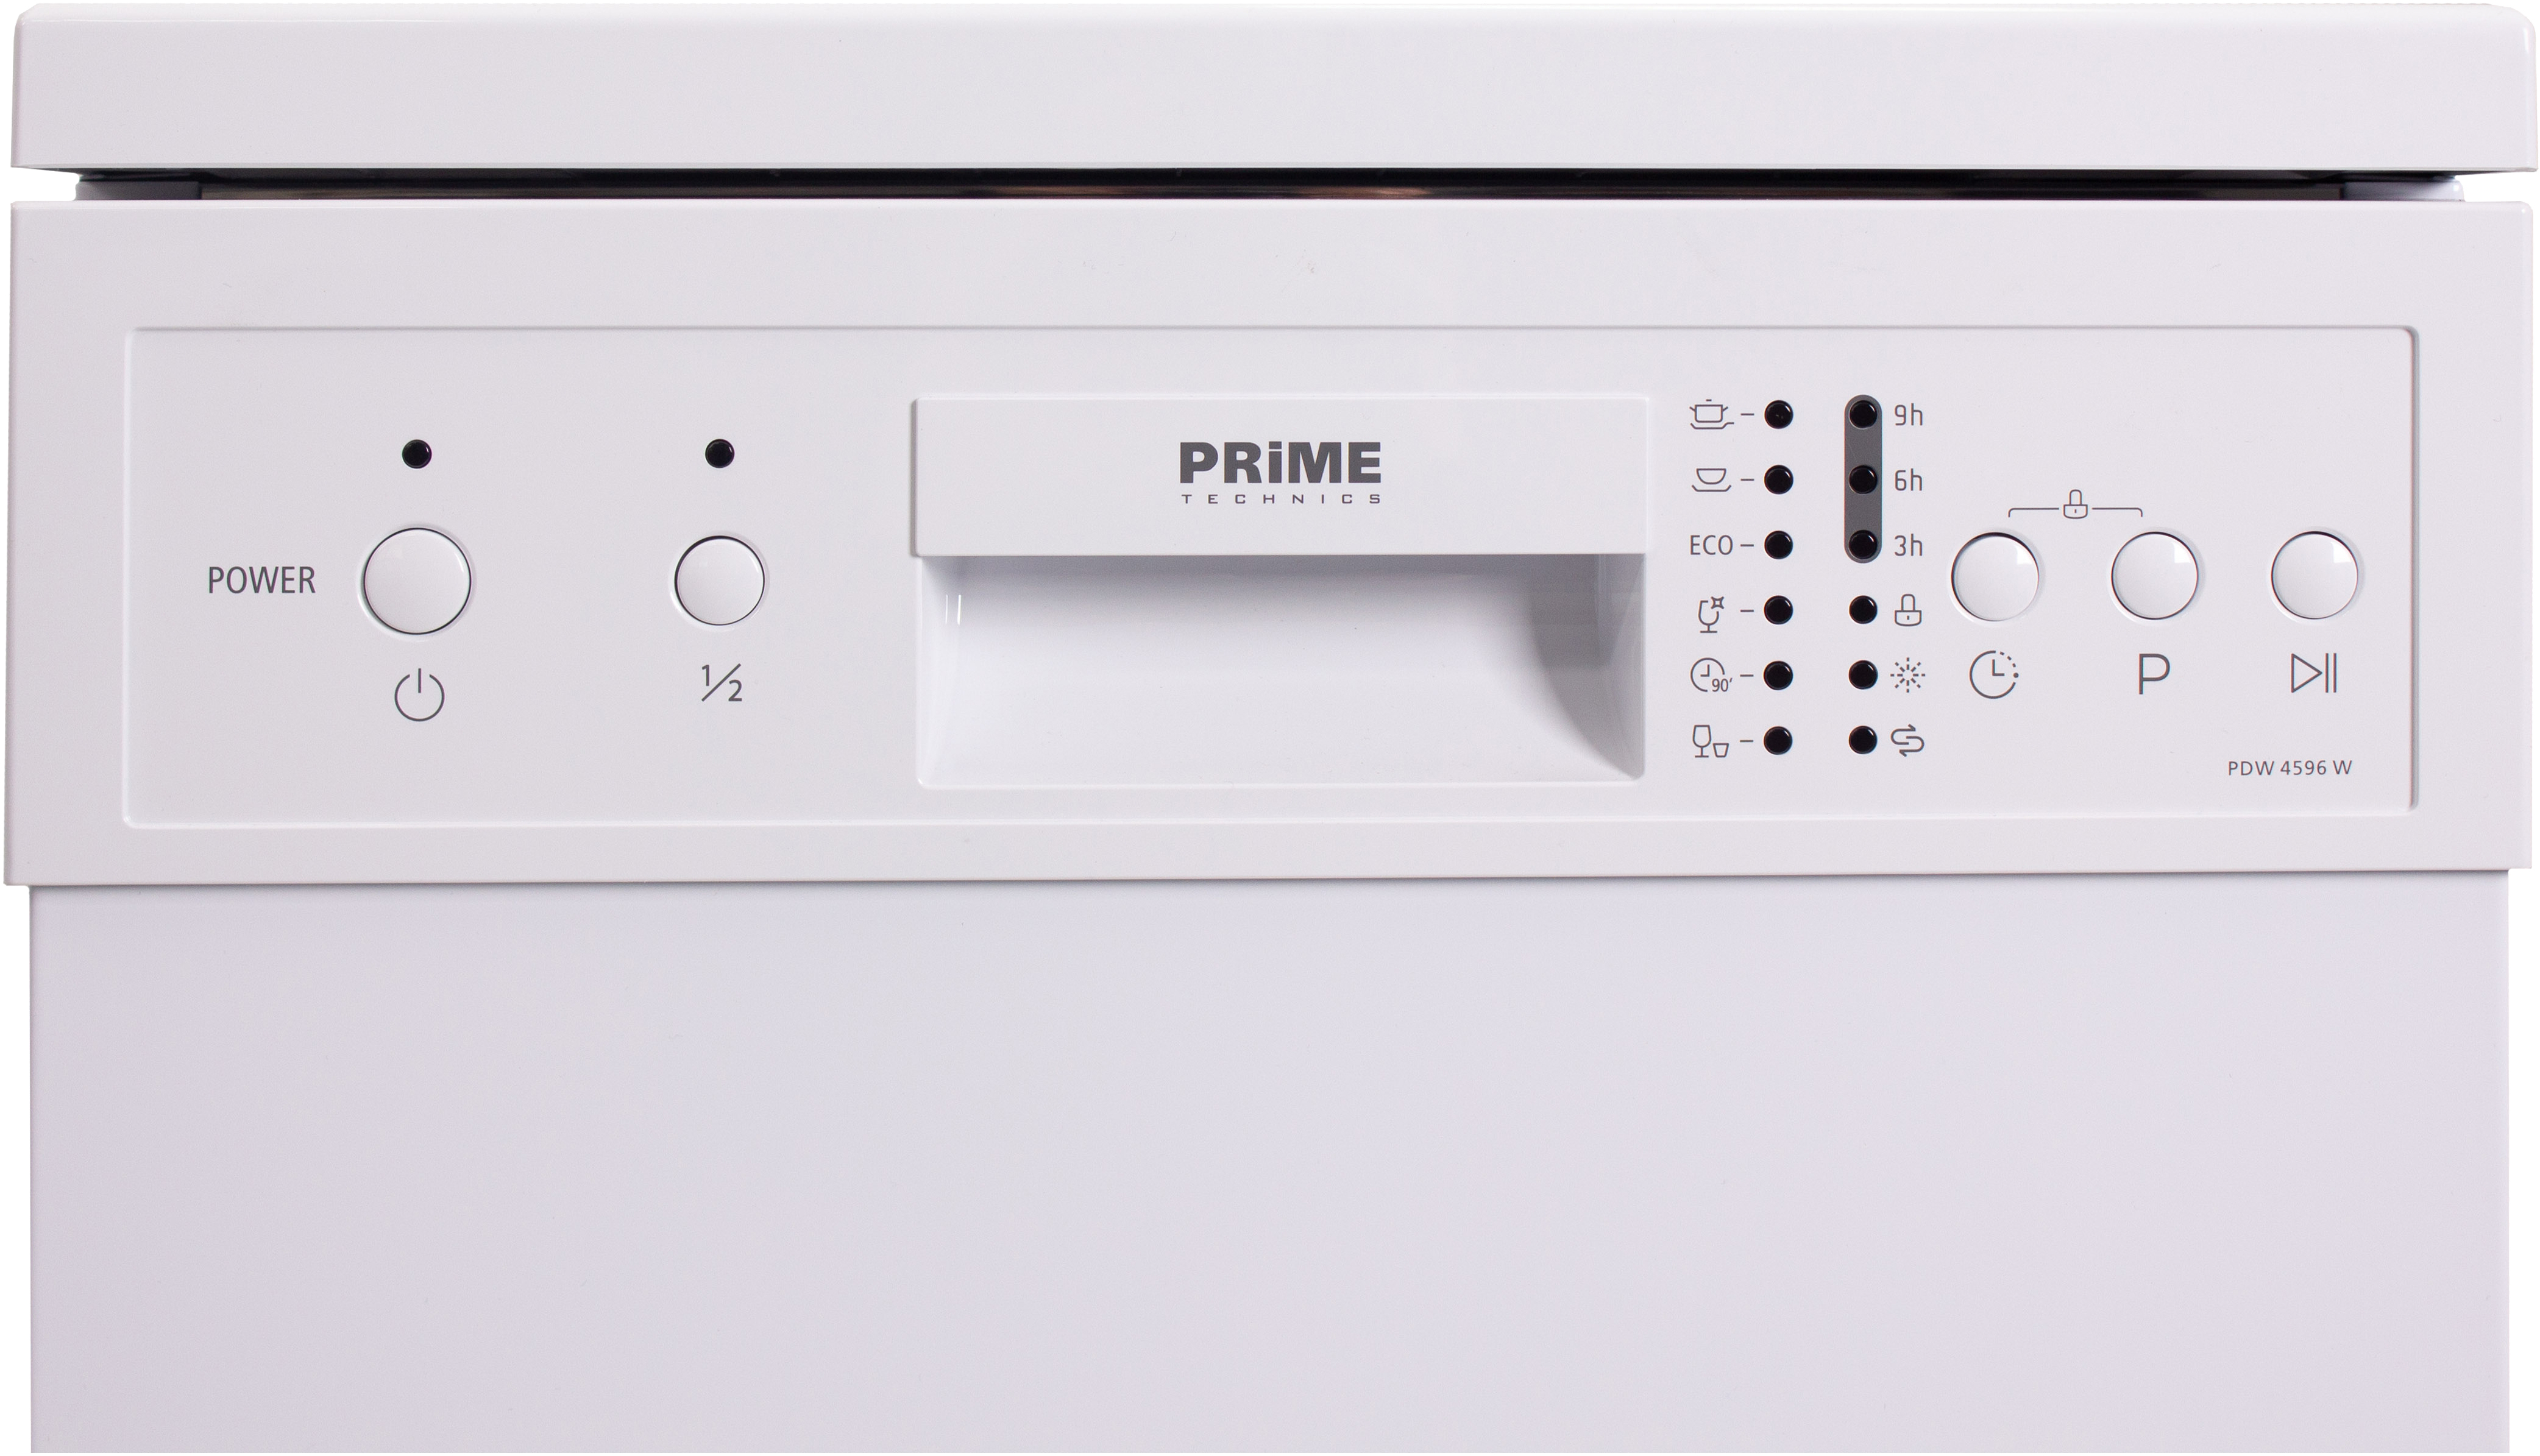 Посудомоечная машина Prime Technics PDW 4596 W цена 12198.00 грн - фотография 2